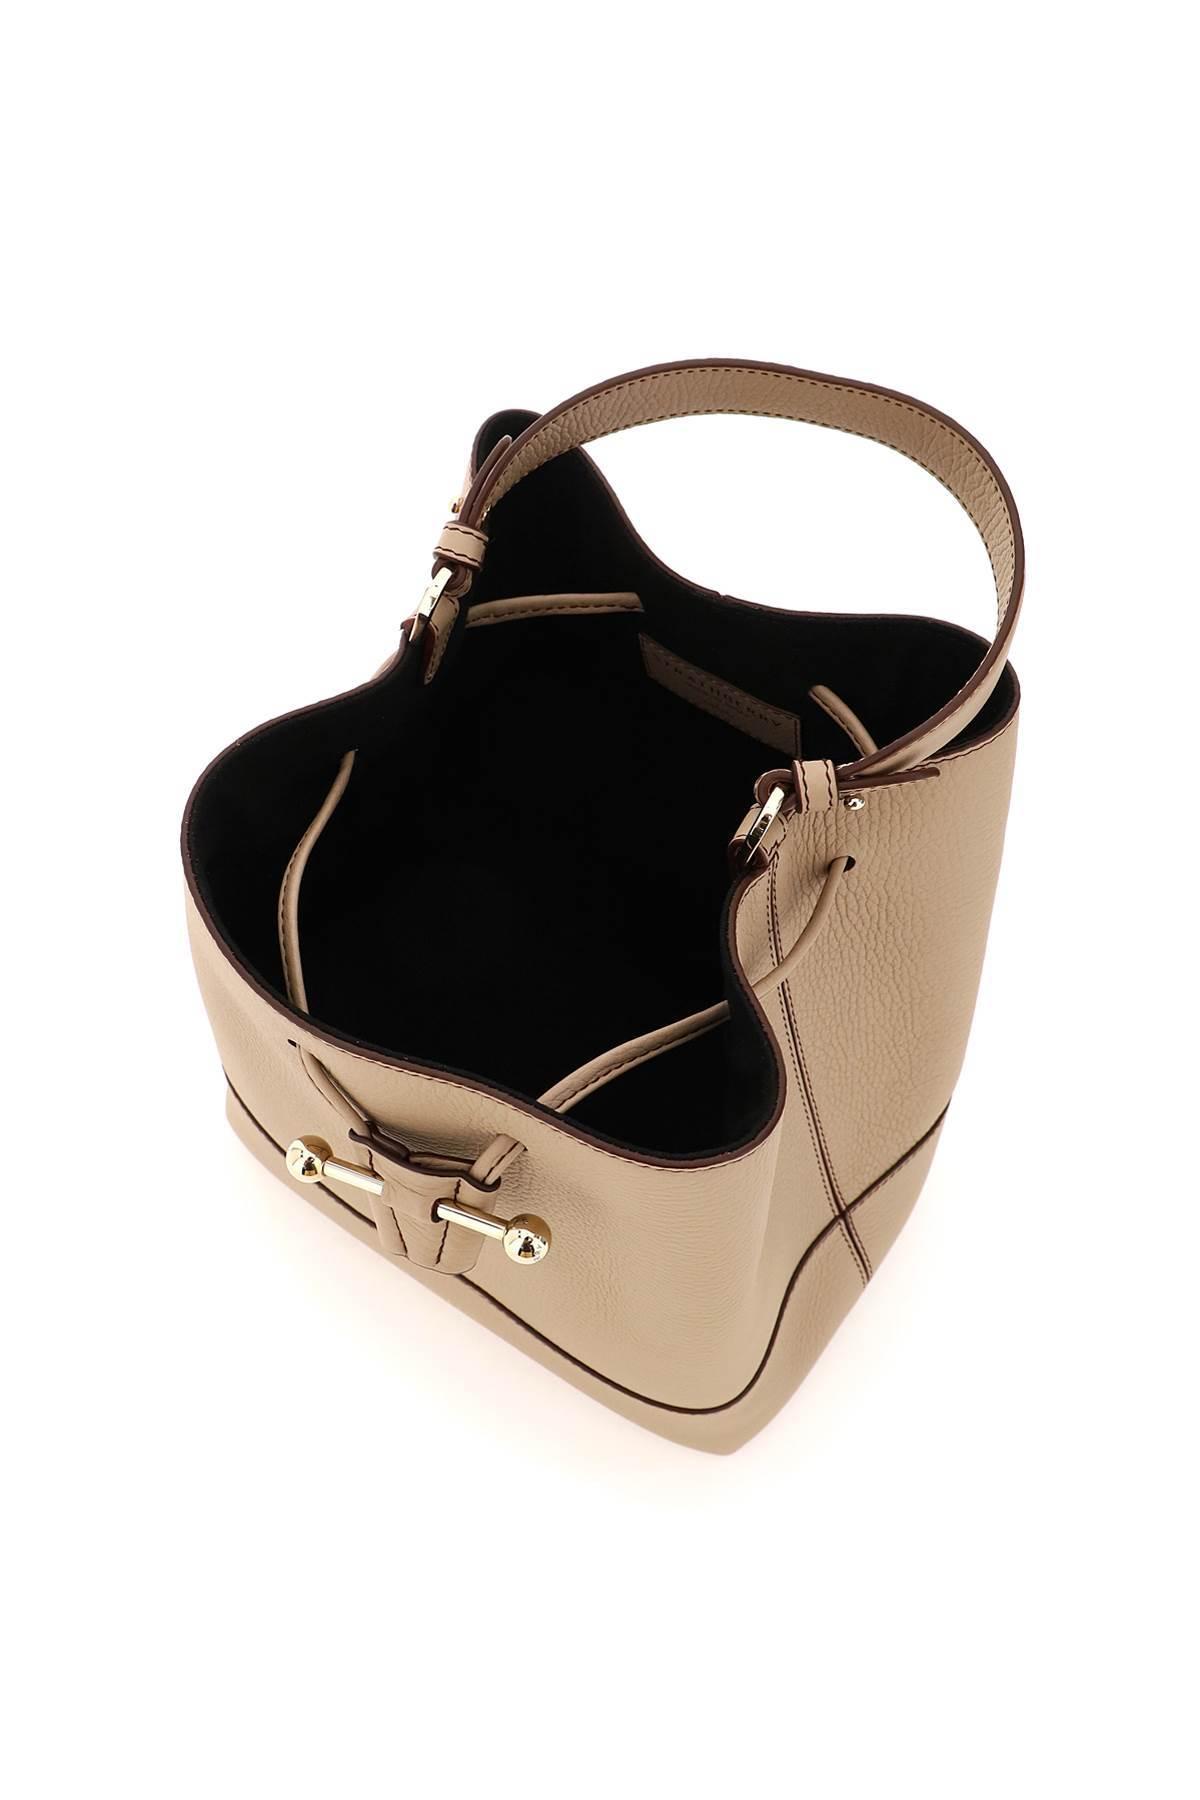 Strathberry 'lana Osette' Bucket Bag - ShopStyle